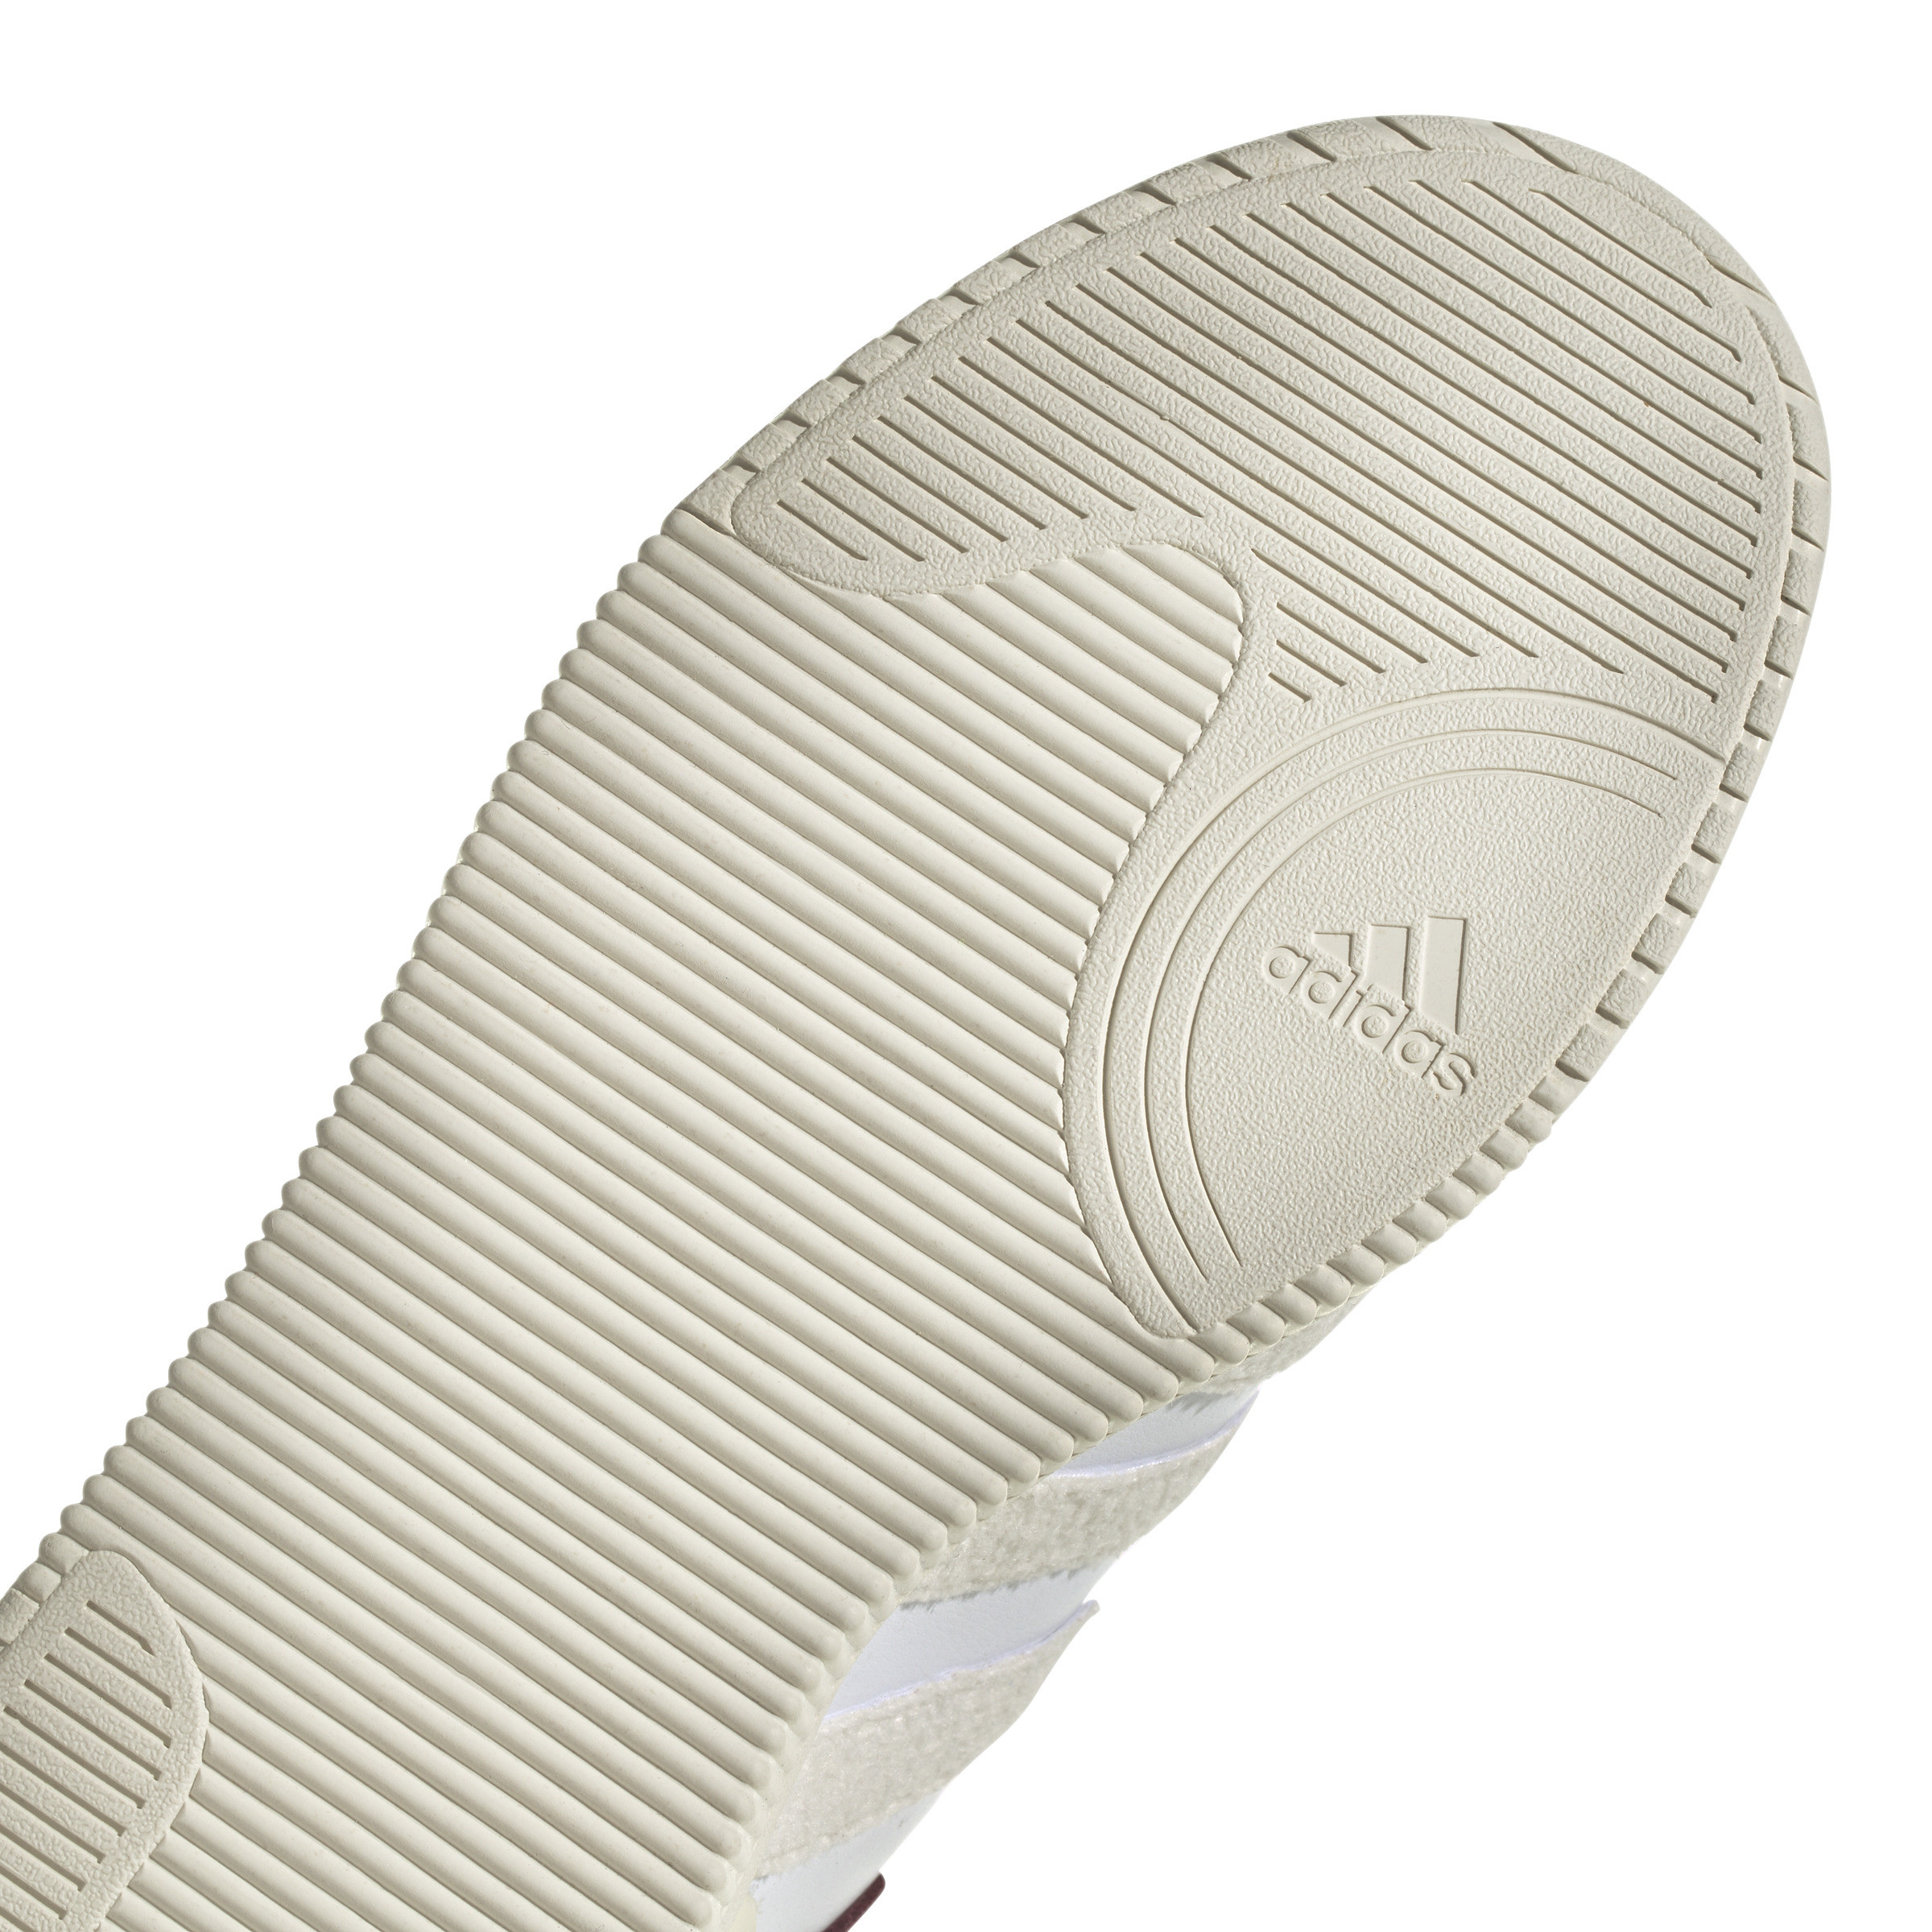 Adidas -Court Funk shoes, White, large image number 6